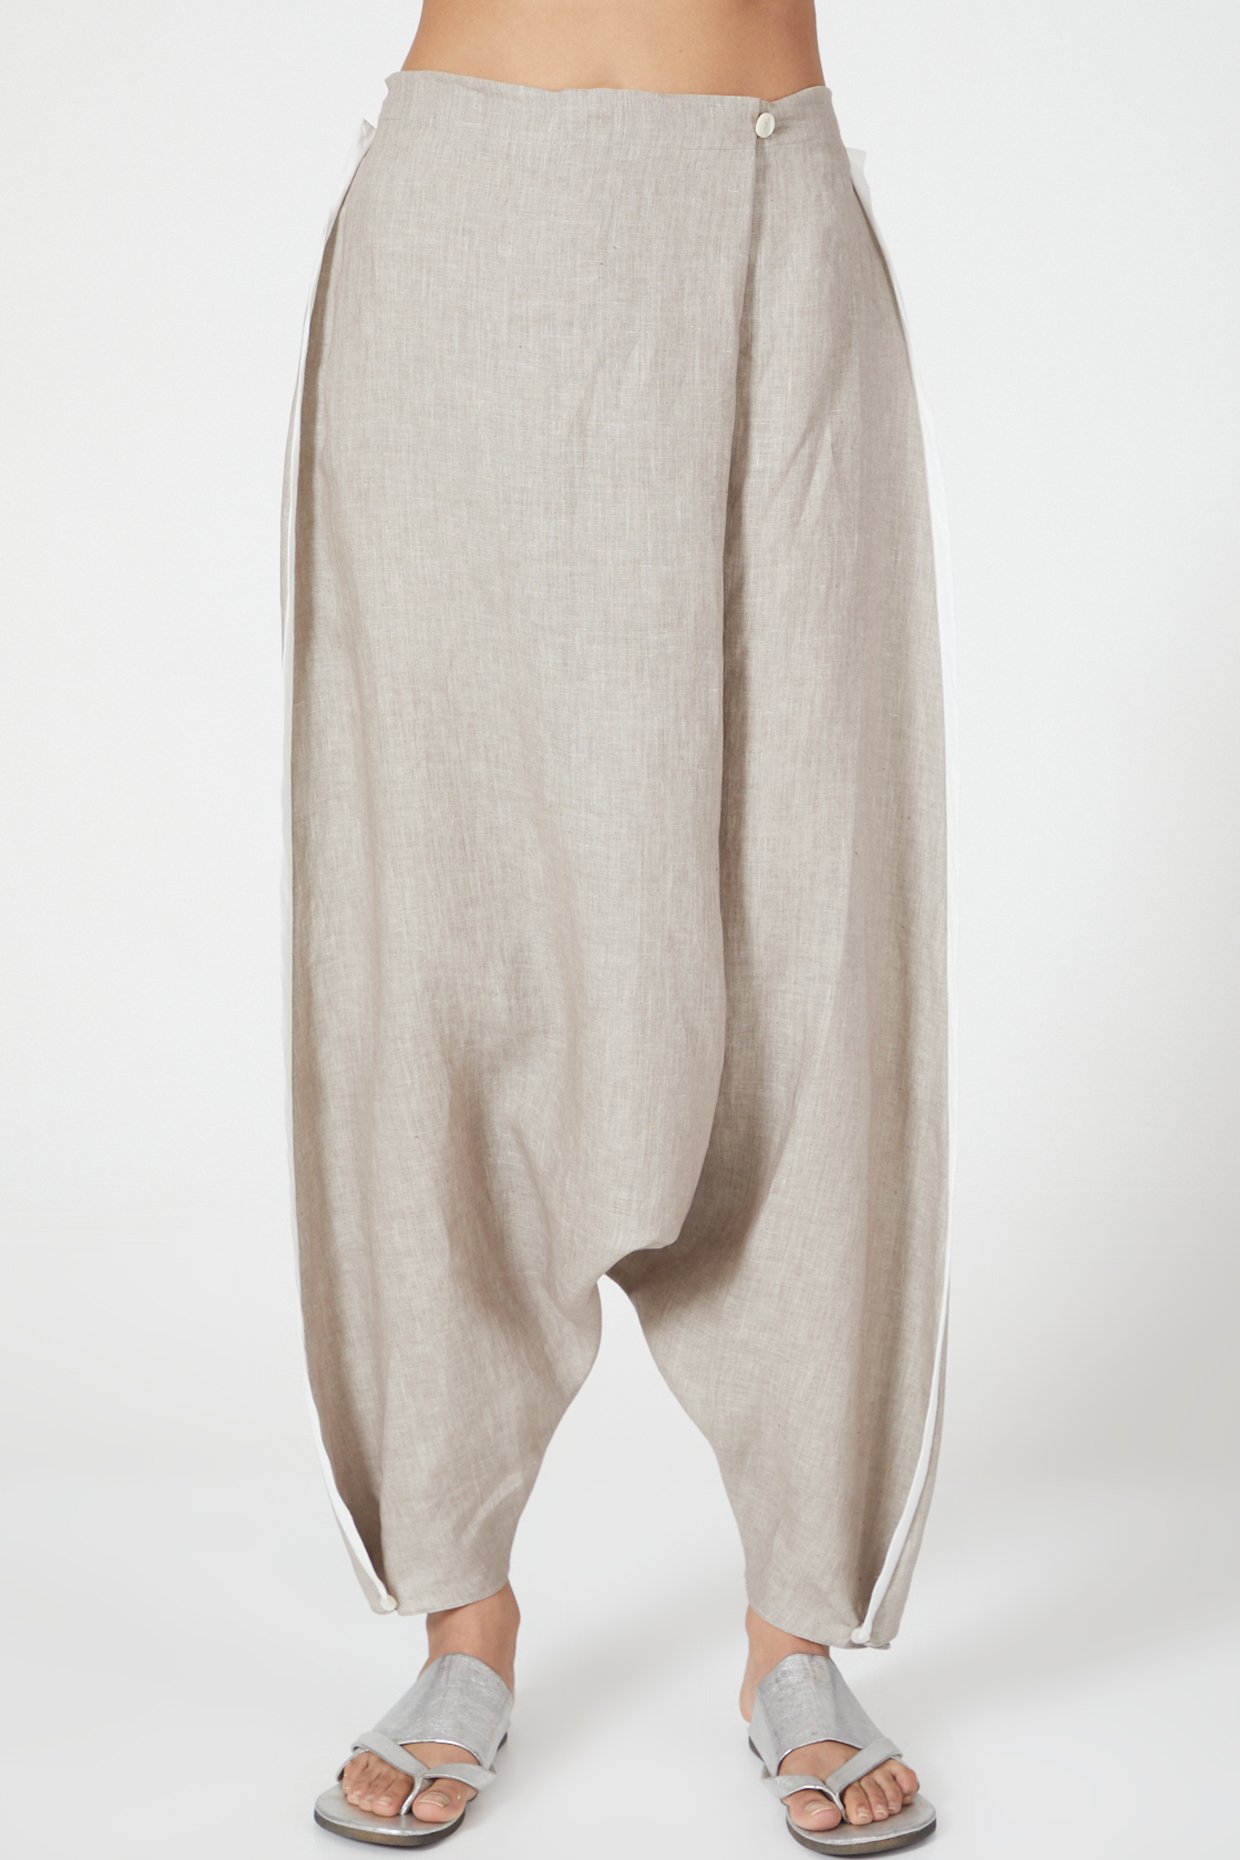 NO.167 Women's Button Detail Drop Crotch Harem Pants, Cross Front Trousers,  Unisex Pants in Teal - Etsy